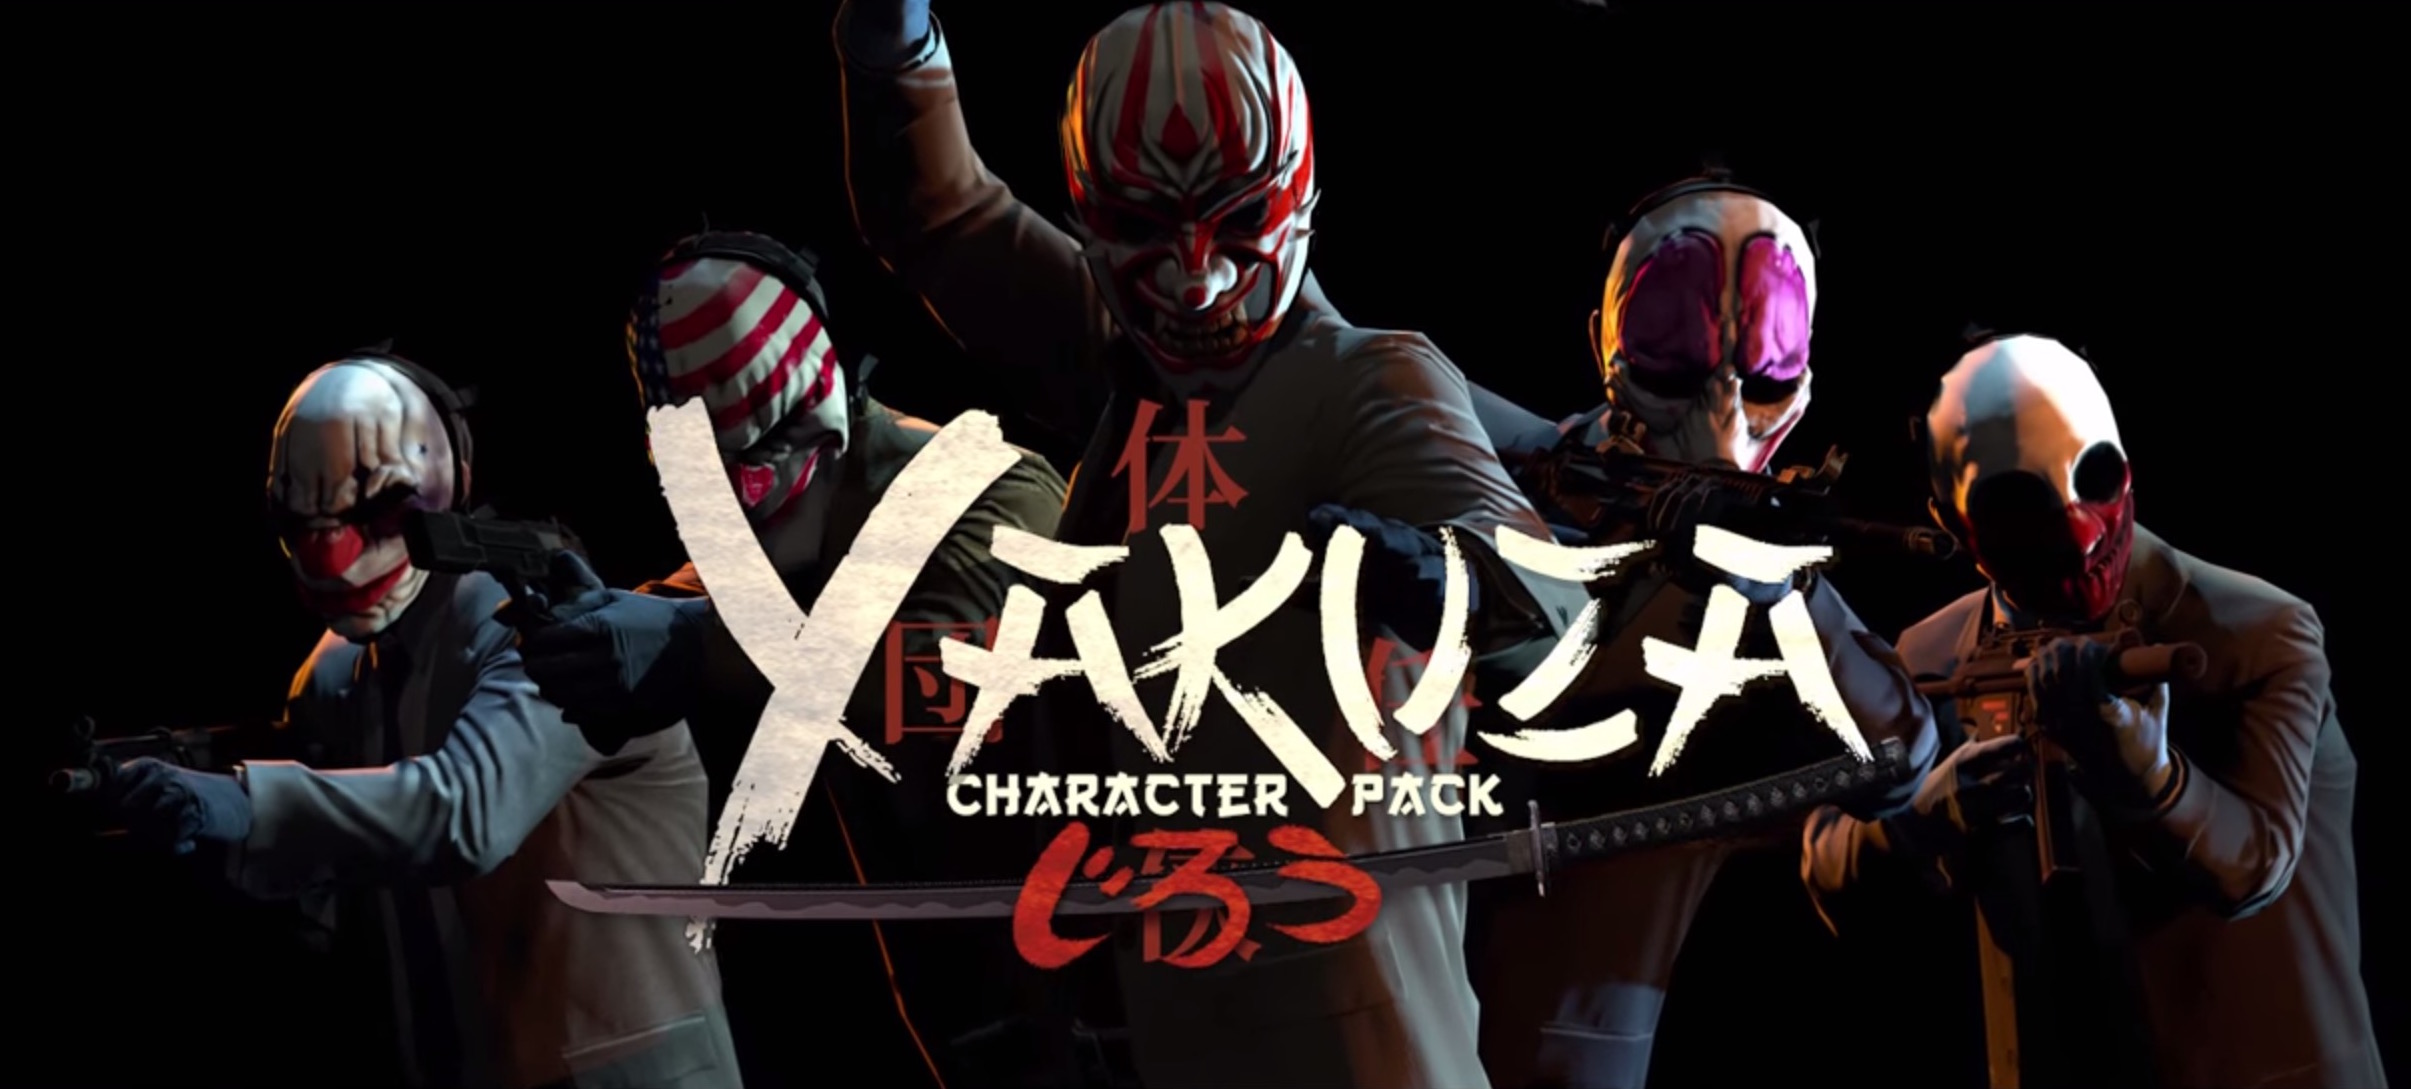 PayDay 2, arriva il character pack Yakuza: ecco il trailer ufficiale